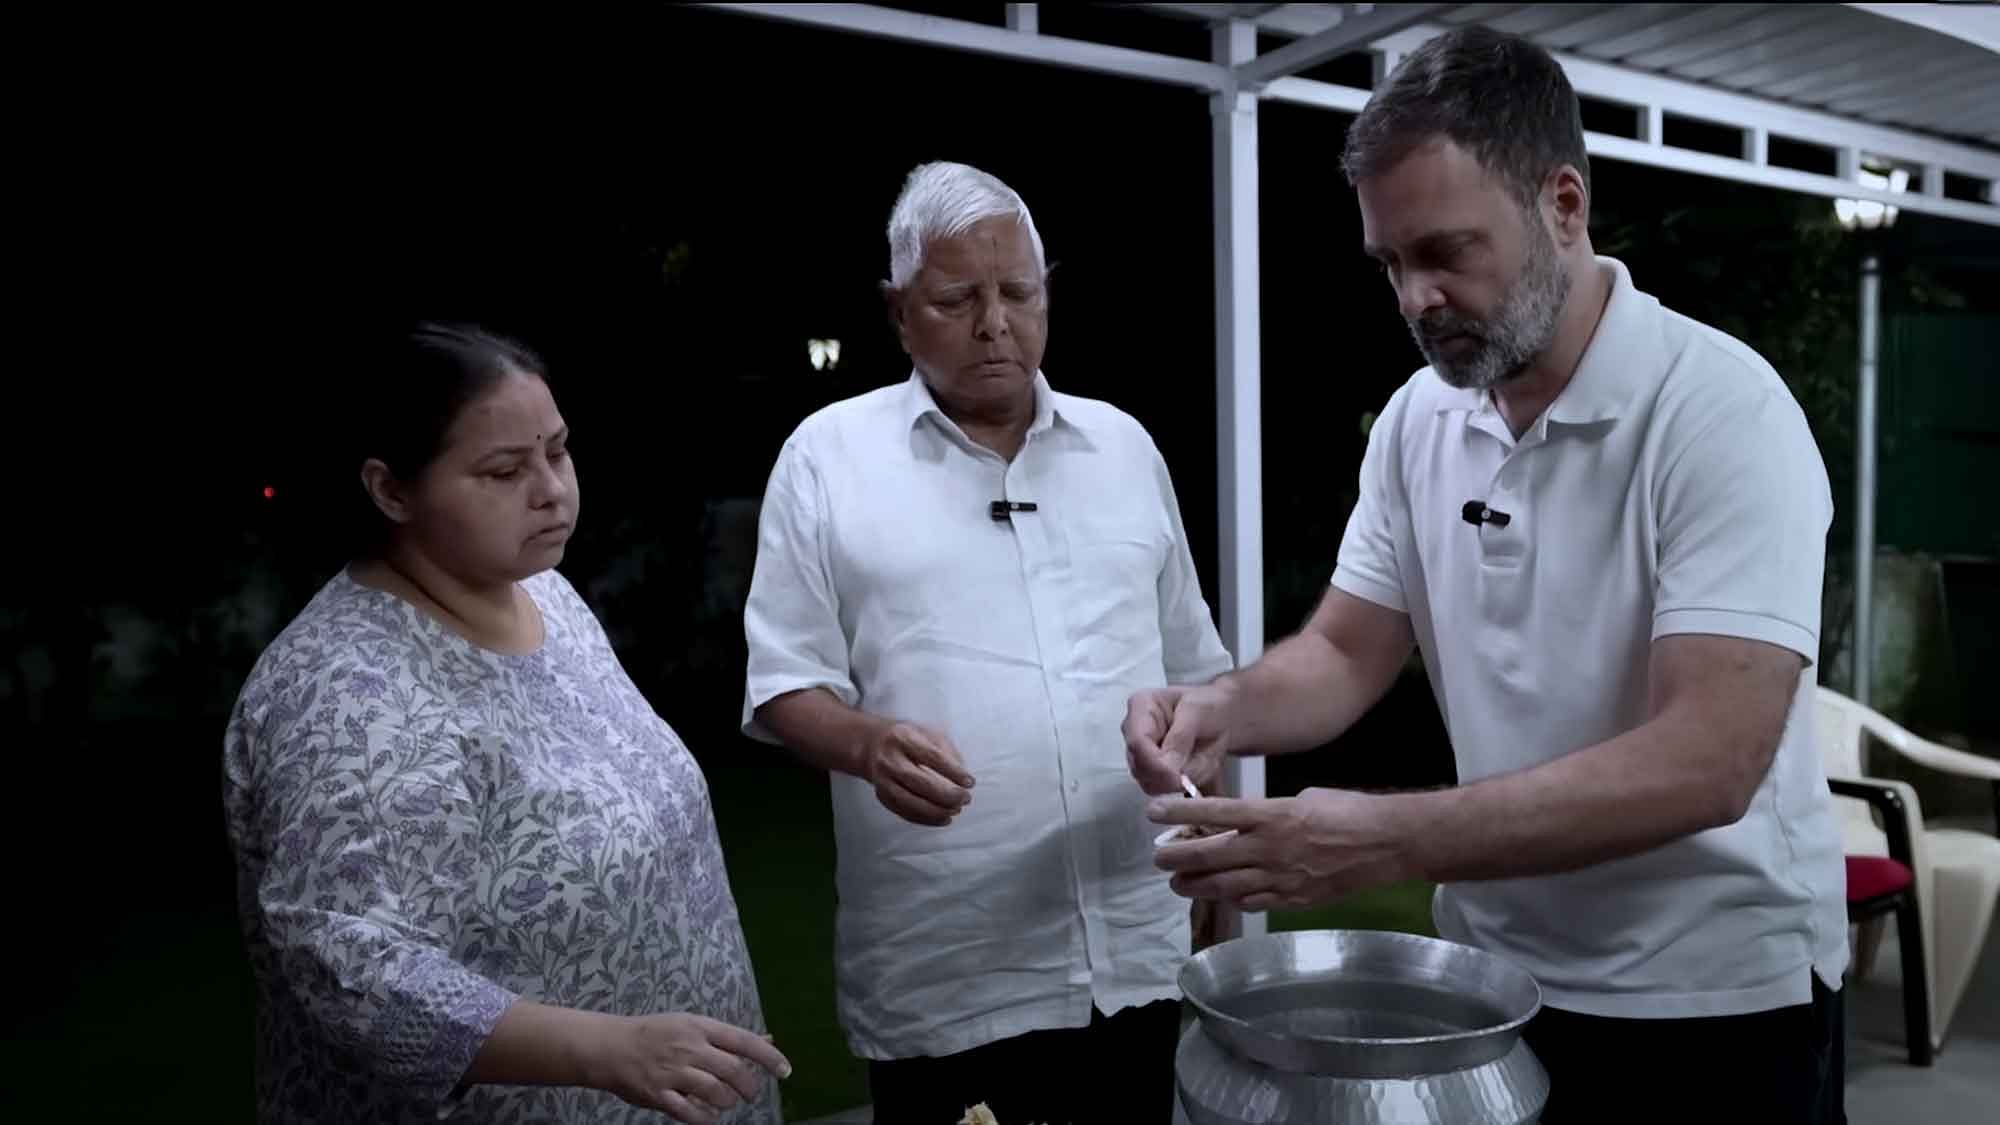 <div class="paragraphs"><p>Rahul Gandhi cooks mutton under the guidance of Lalu Prasad Yadav and Misa Bharti.</p></div>